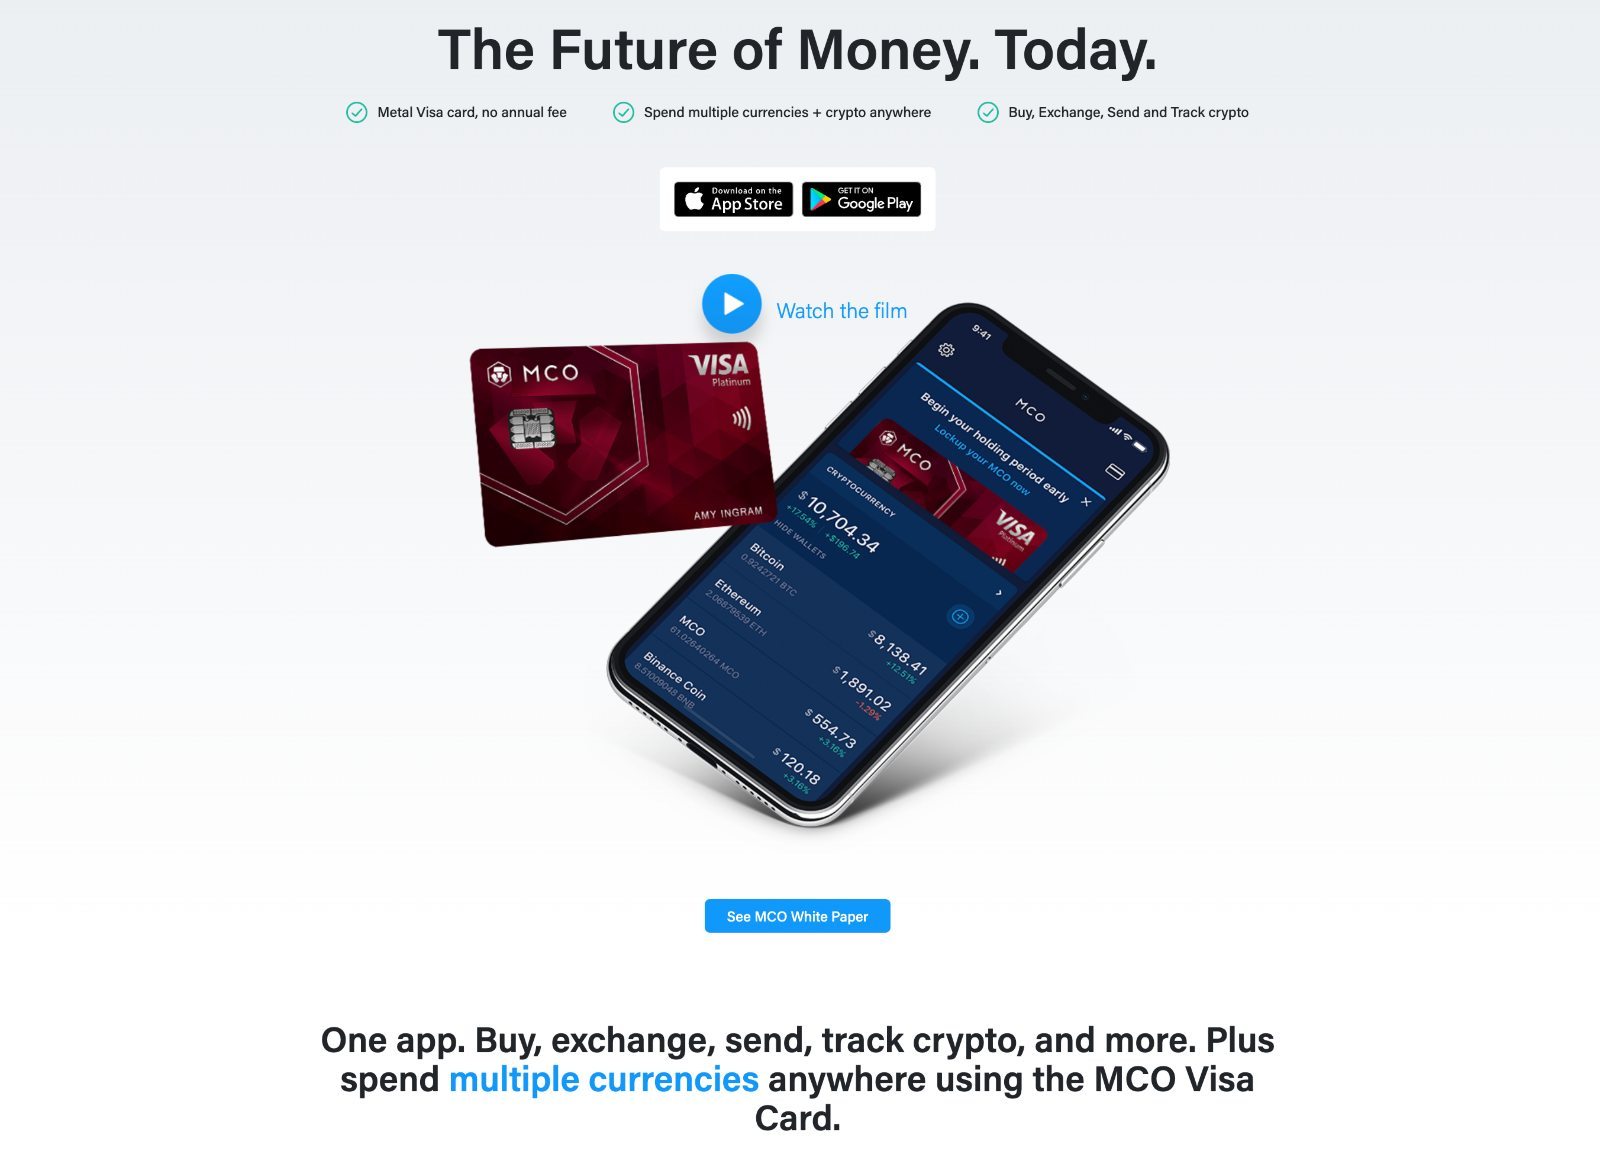 crypto.com monaco homepage 2018